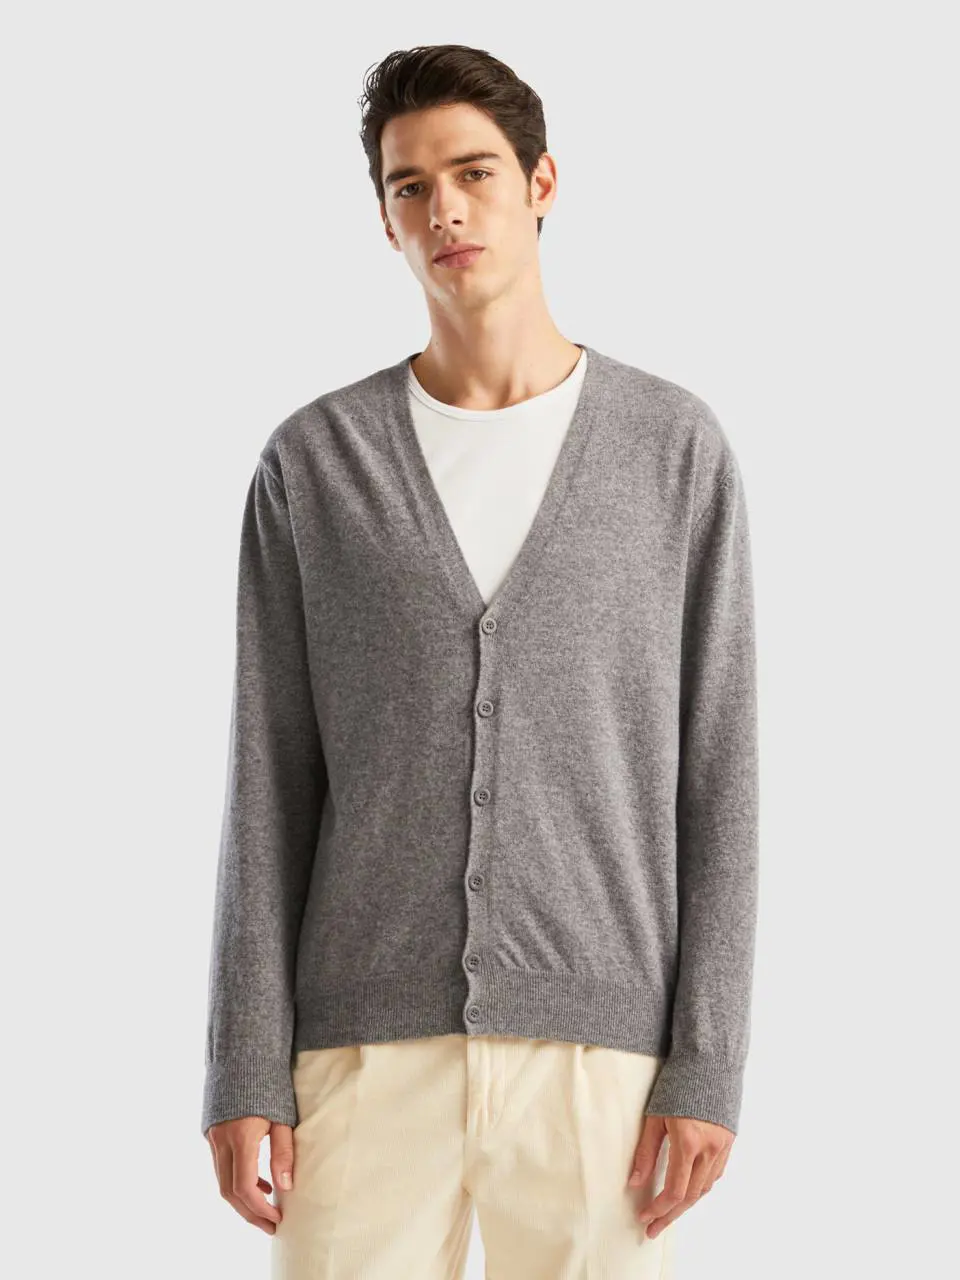 Benetton gray v-neck cardigan in pure merino wool. 1